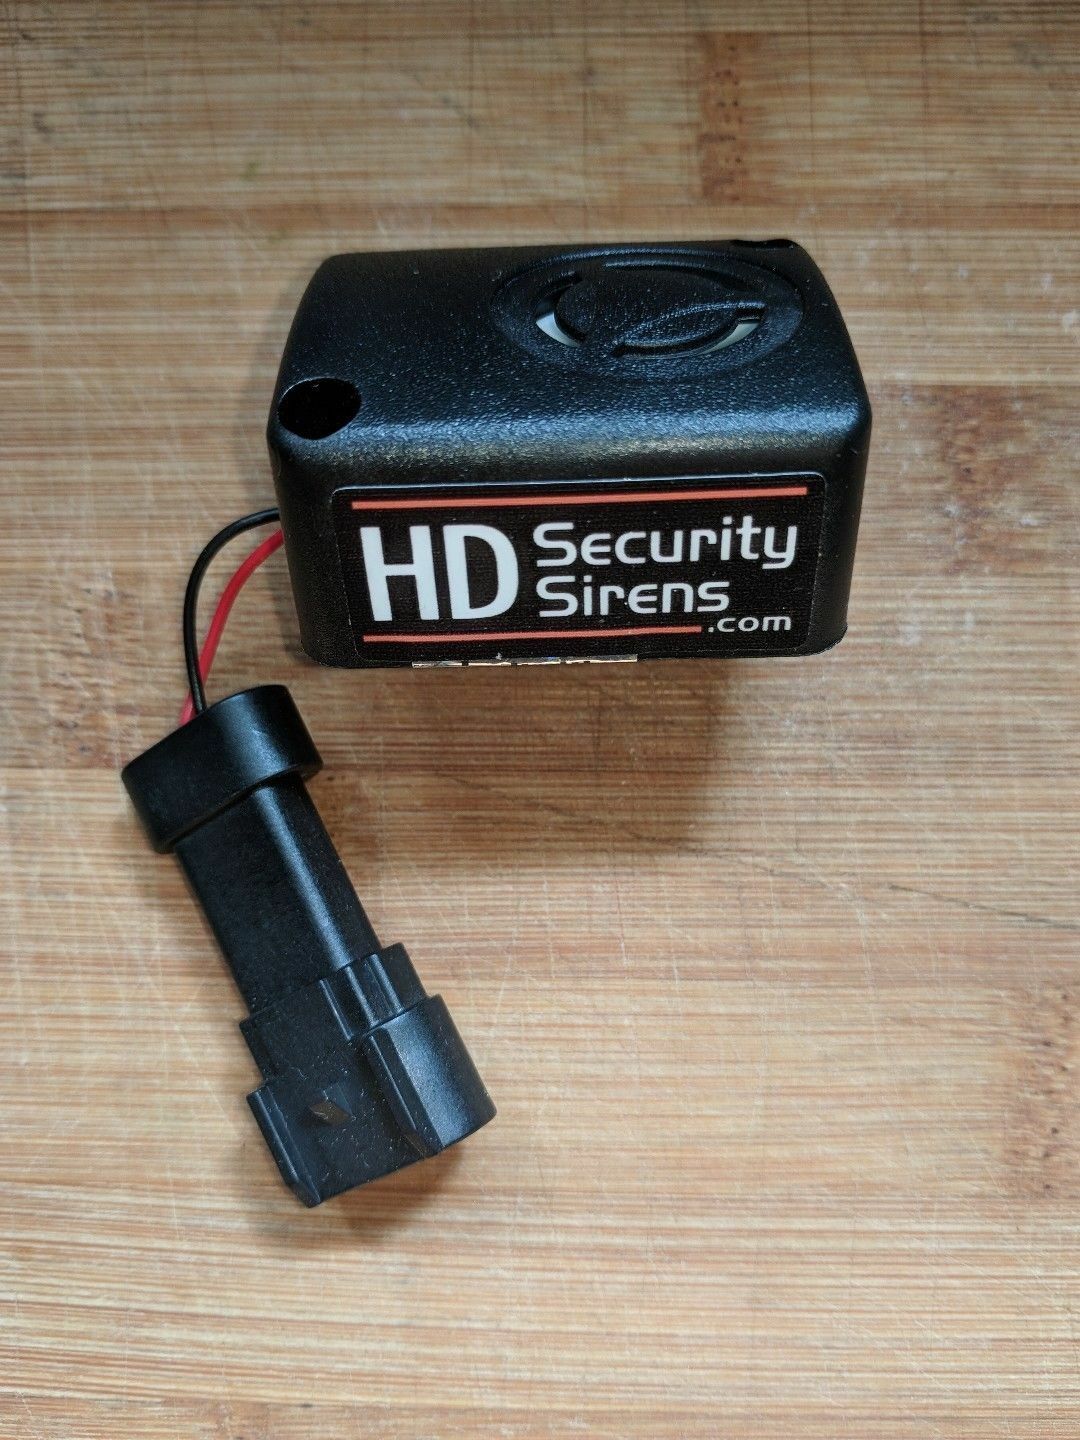 Hd-security Siren I (110db Aftermarket Harley Davidson Smart Siren) Read Full